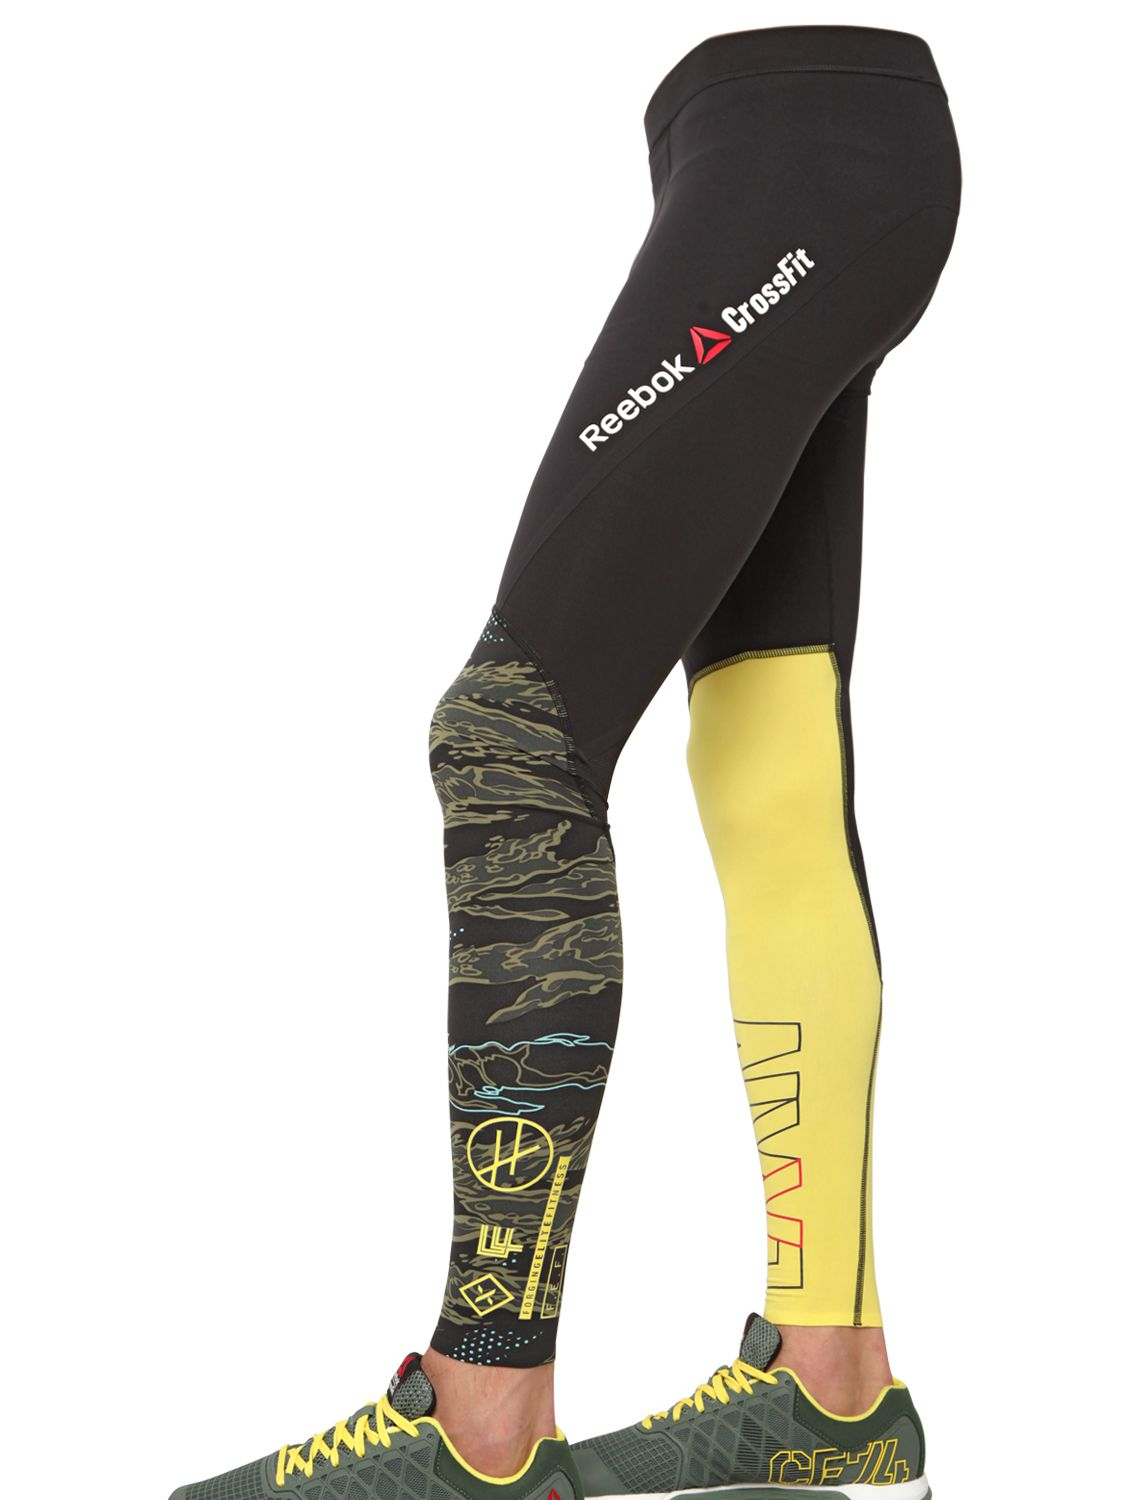 Troende lejlighed Kemiker Reebok Crossfit Stretch Leggings in Black/Yellow (Black) for Men - Lyst